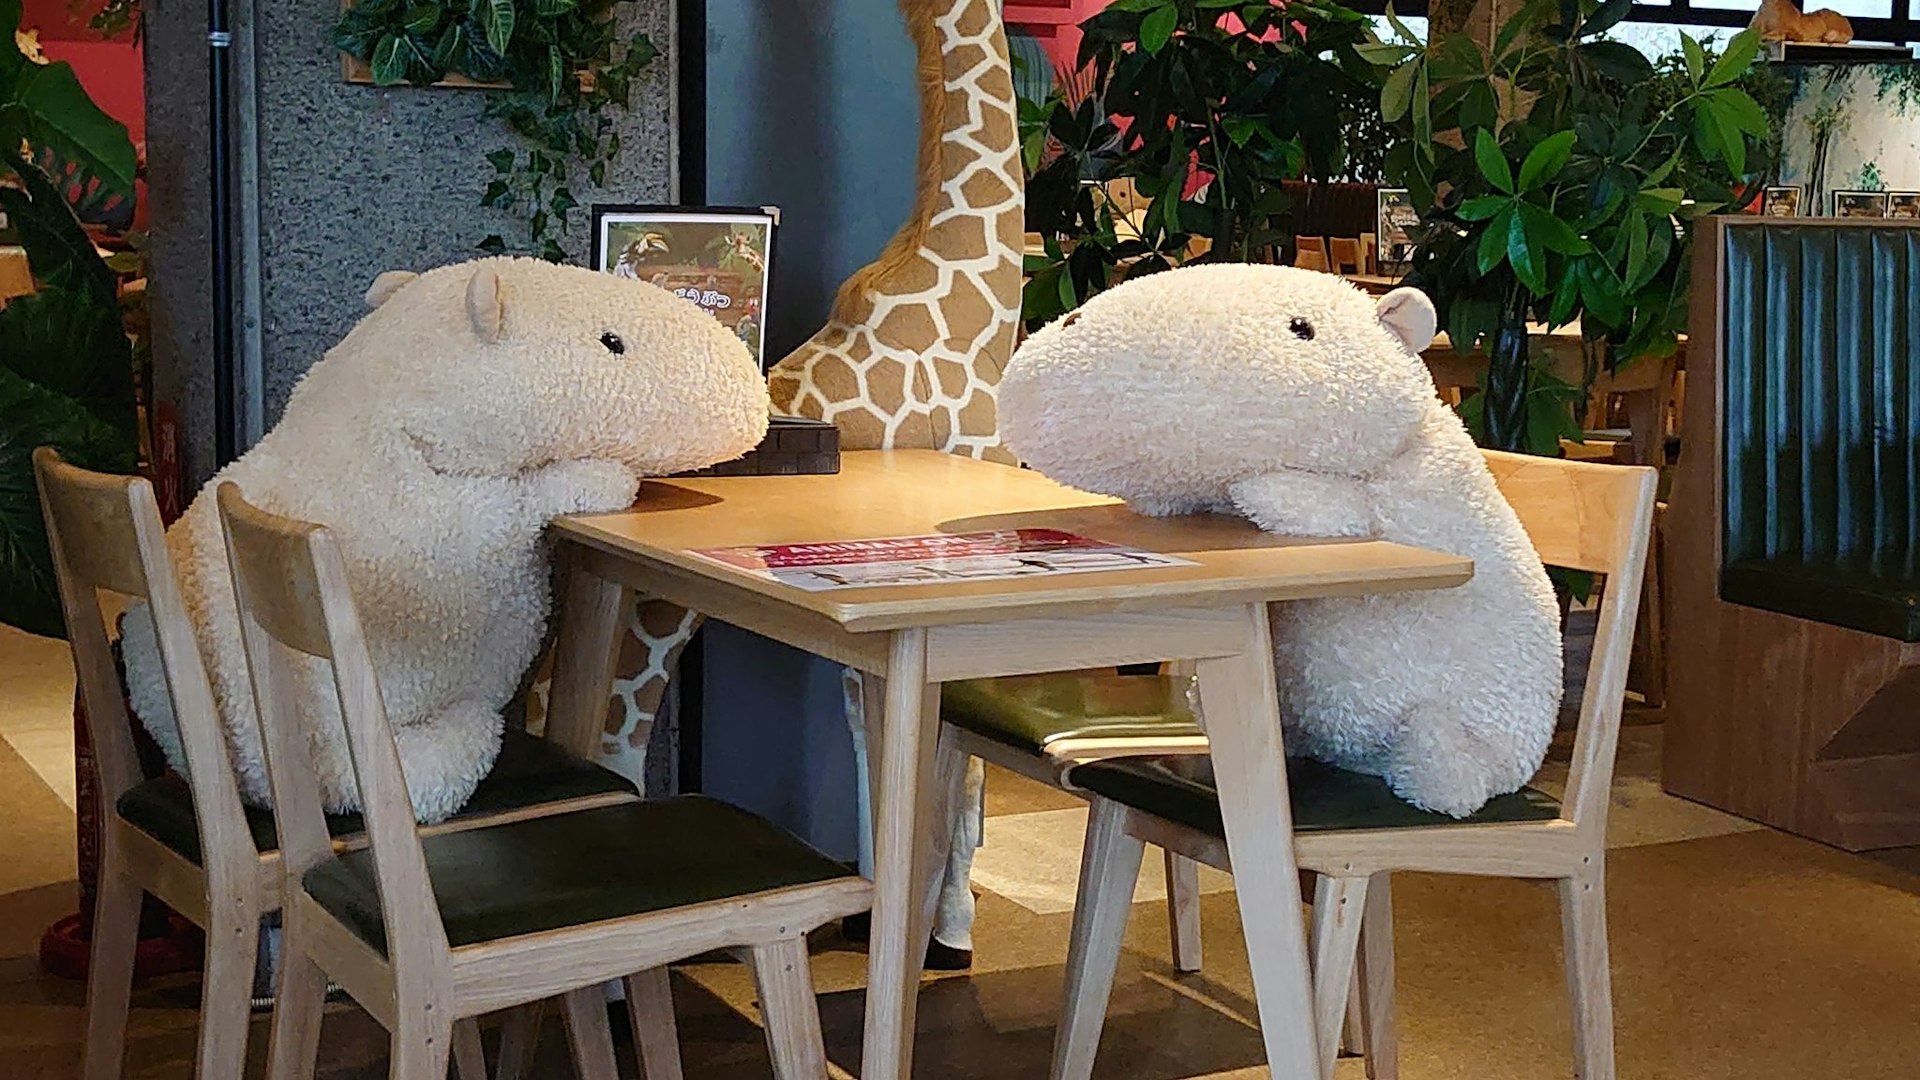 capybararestaurants.jpeg